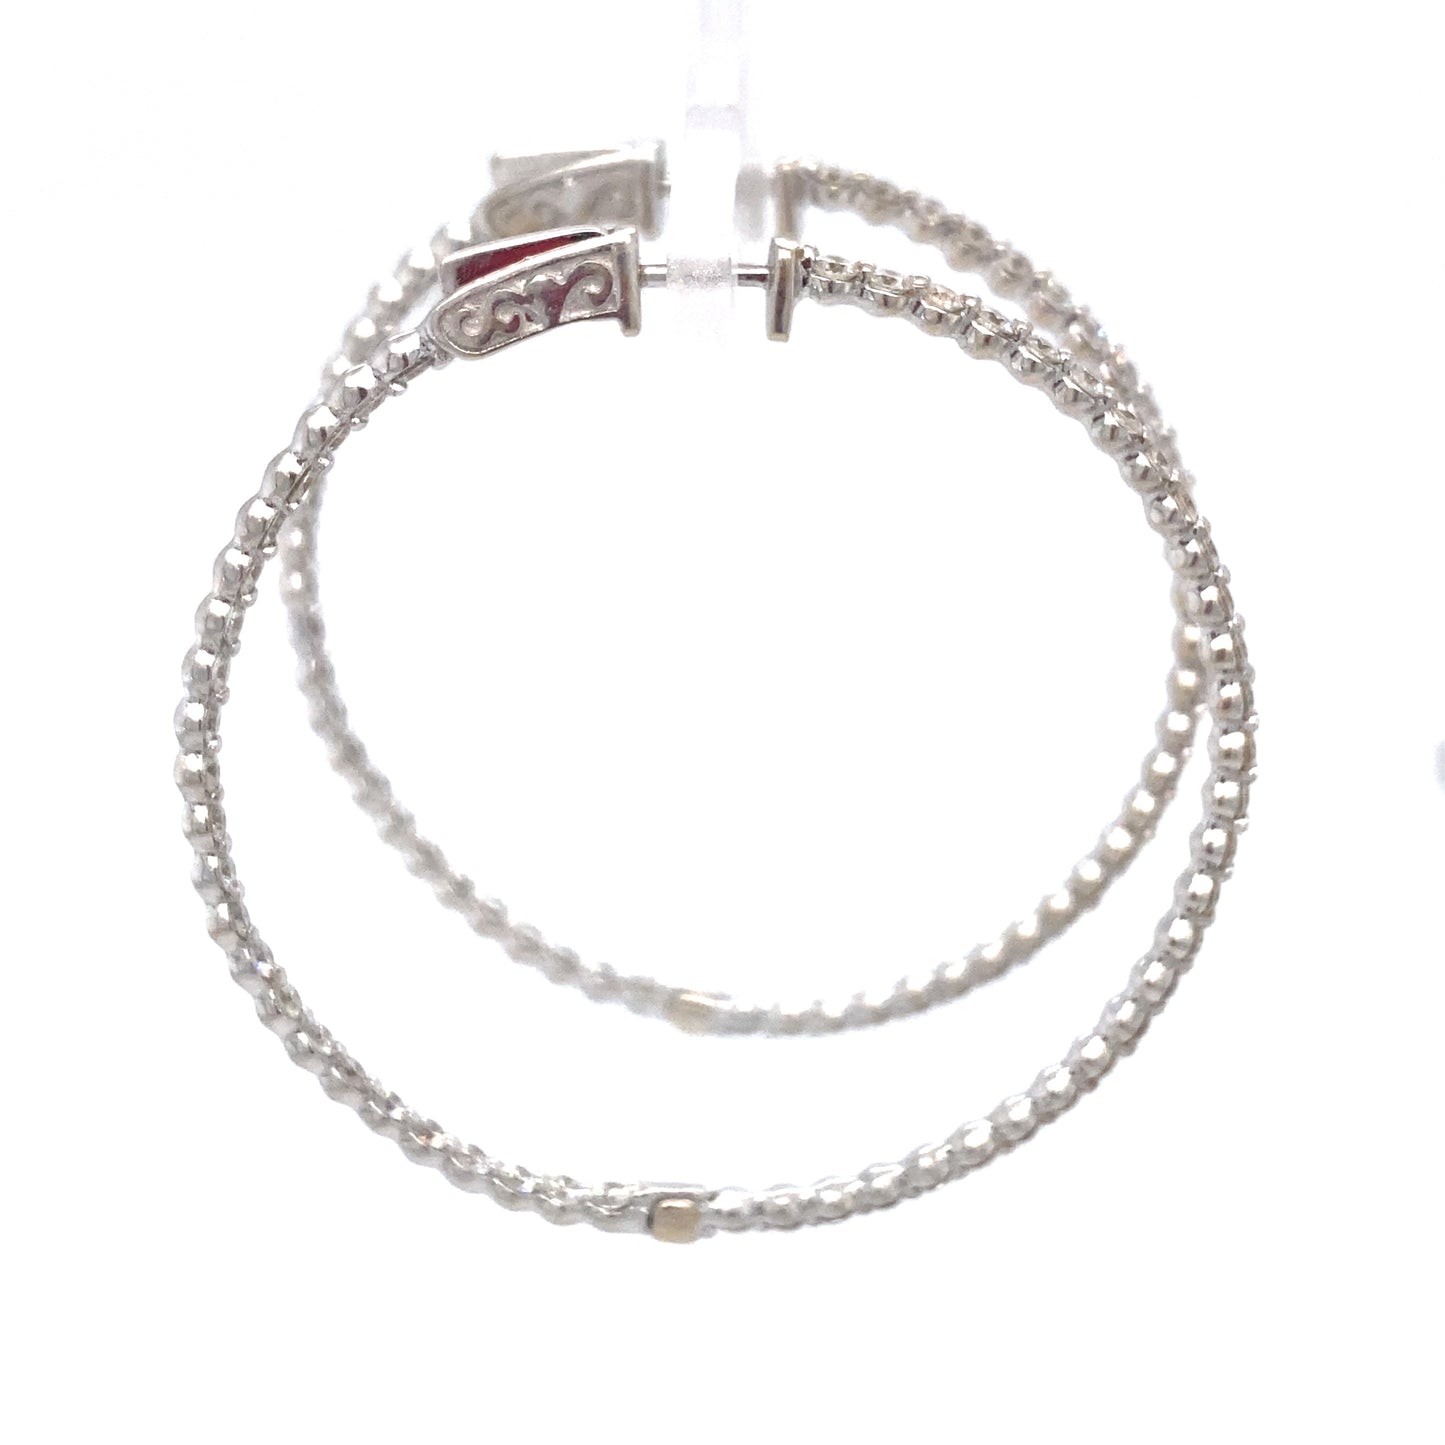 Circa 1990s 2.60 Carat Inside Out Diamond Hoop Earrings in 18K White Gold